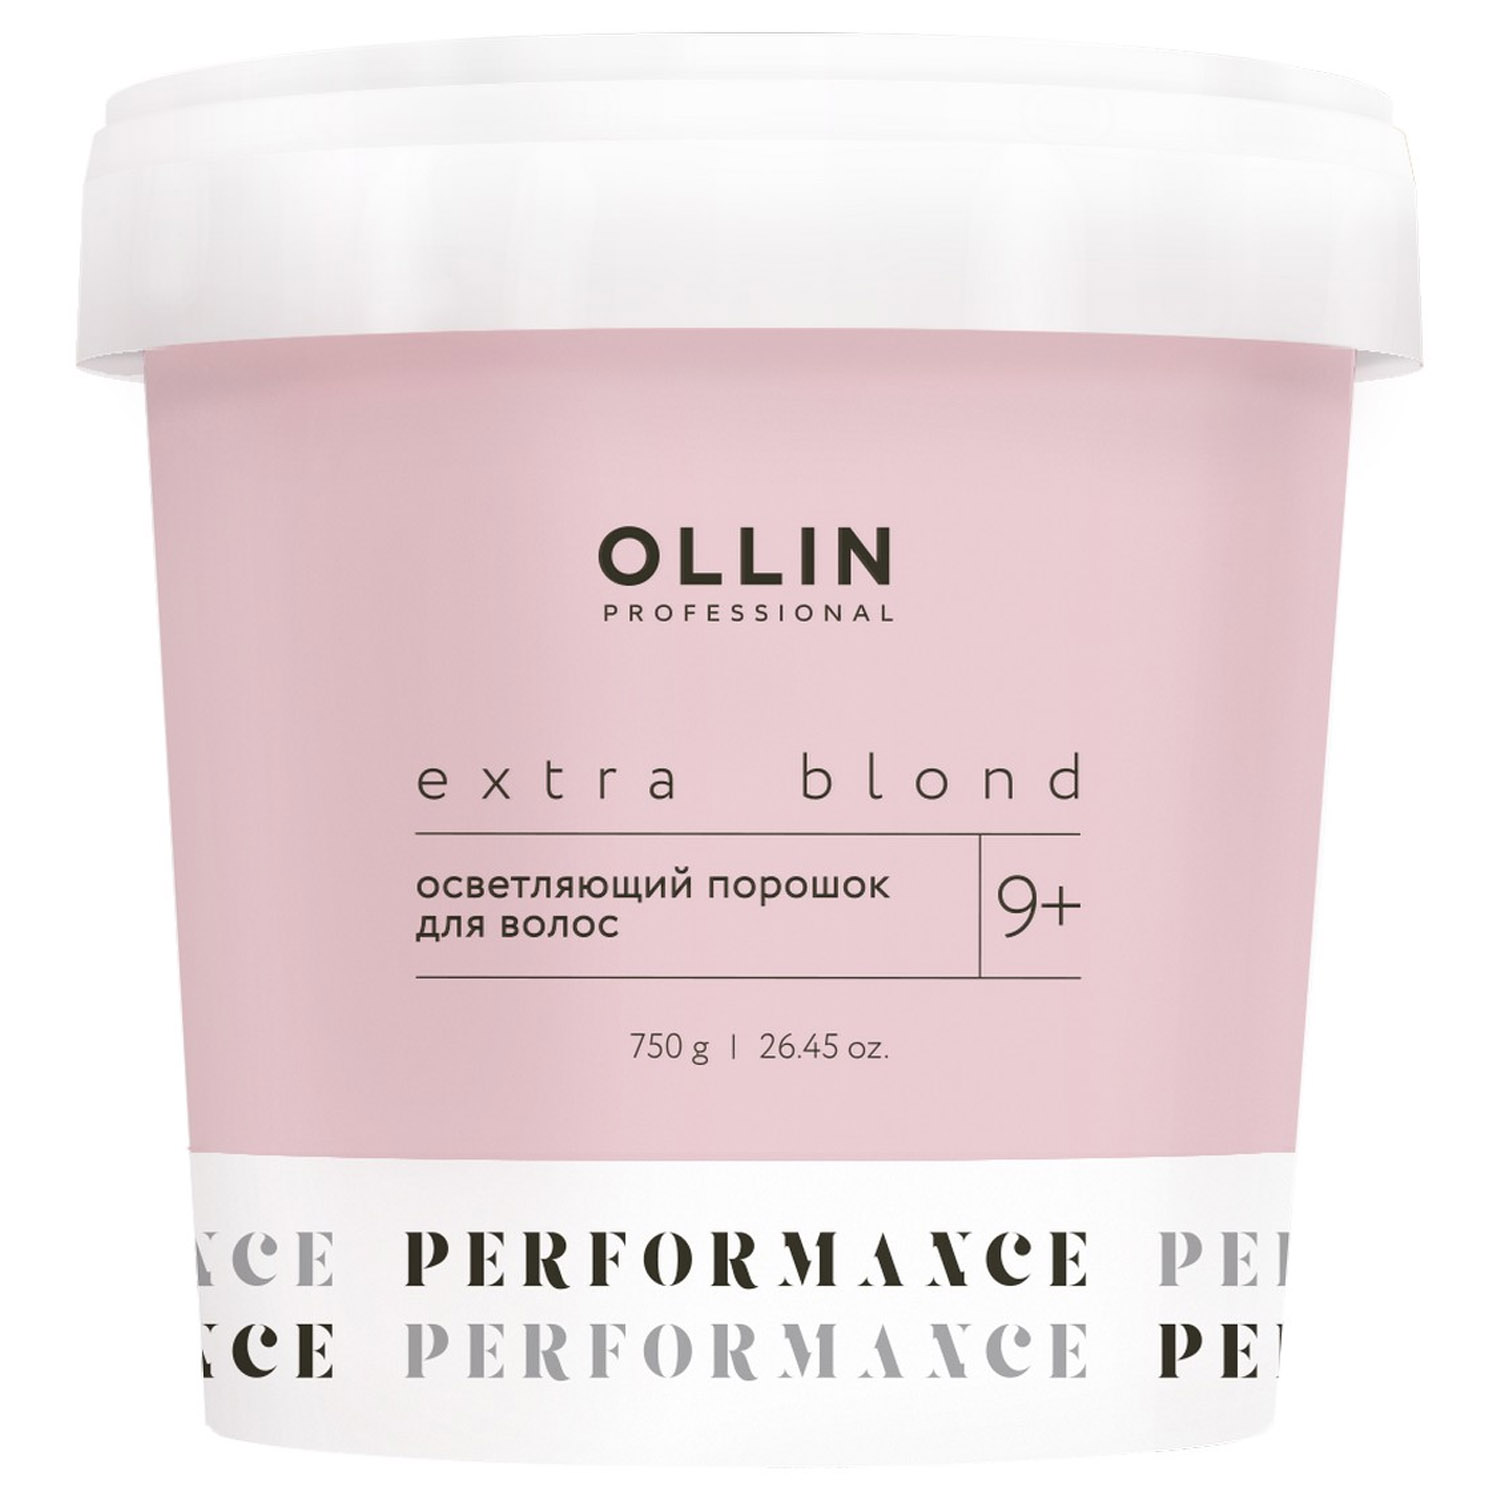 цена Ollin Professional Осветляющий порошок для волос Extra Blond 9+, 750 г (Ollin Professional, Performance)